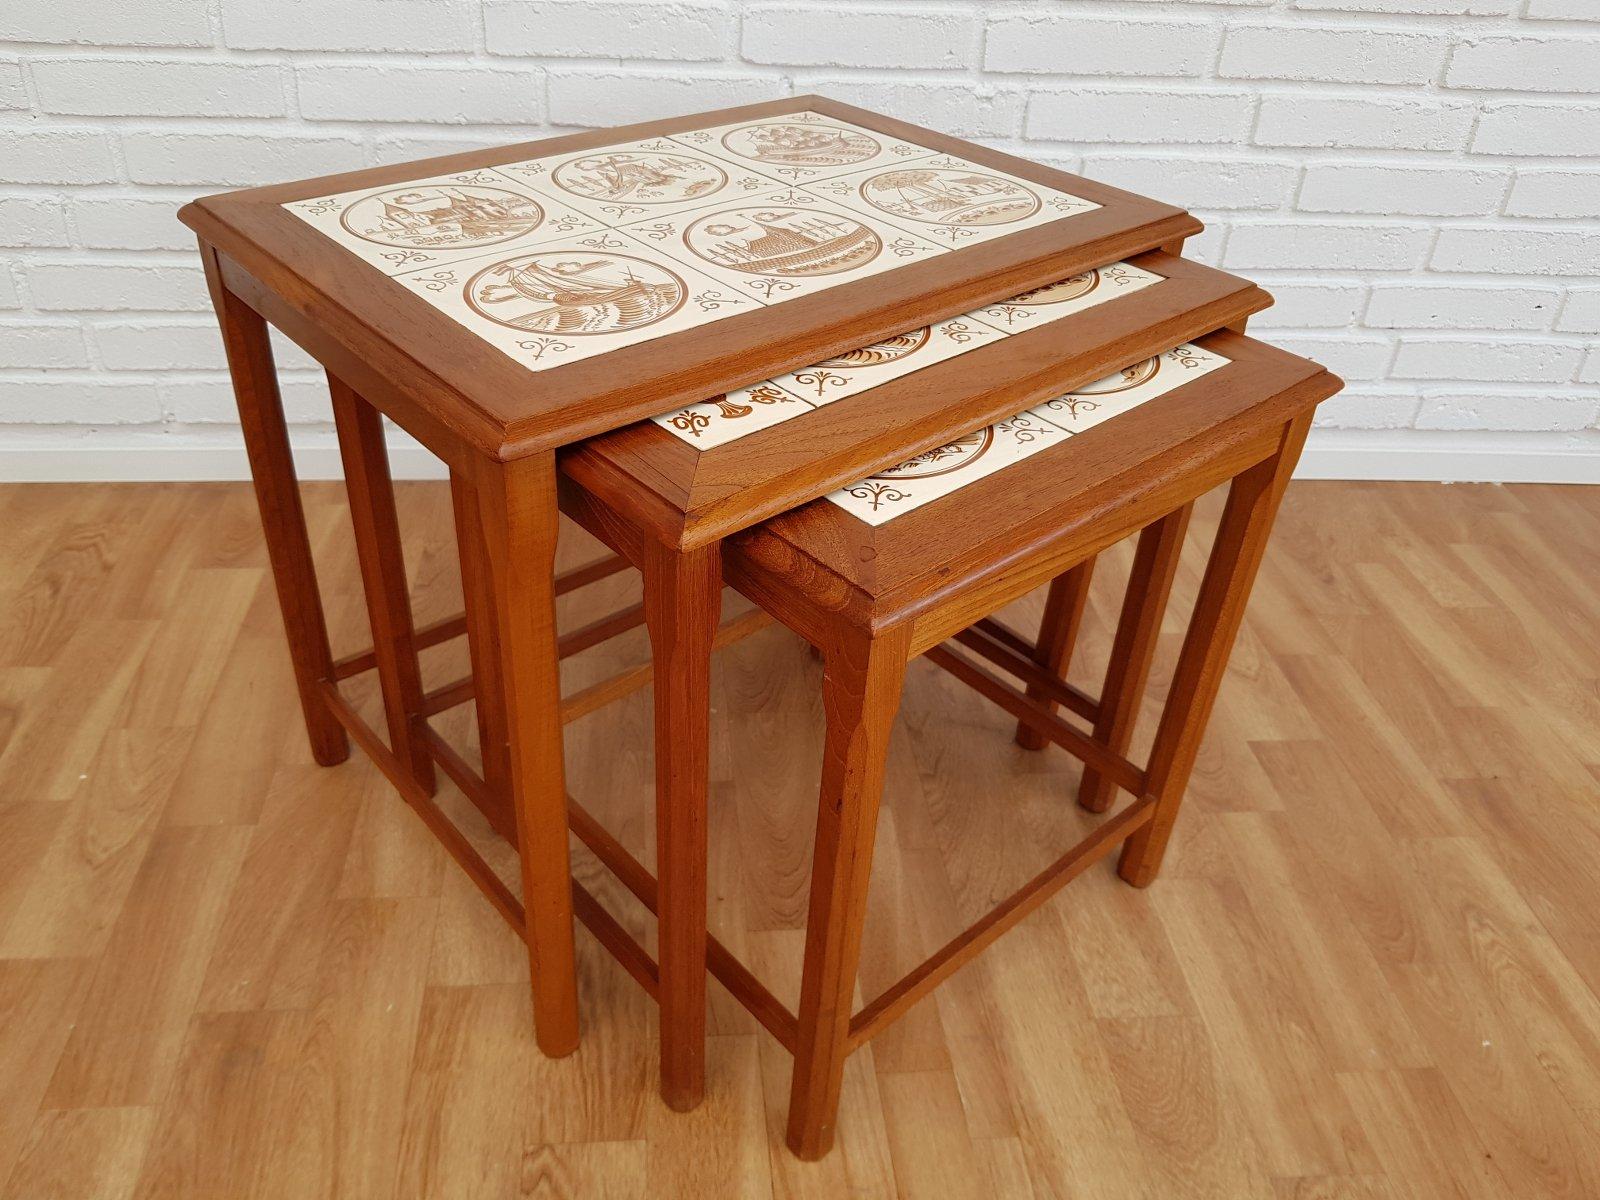 70s, Nesting Table, Danish Design, Hand-Painted Ceramic Tiles, Teak Wood For Sale 2